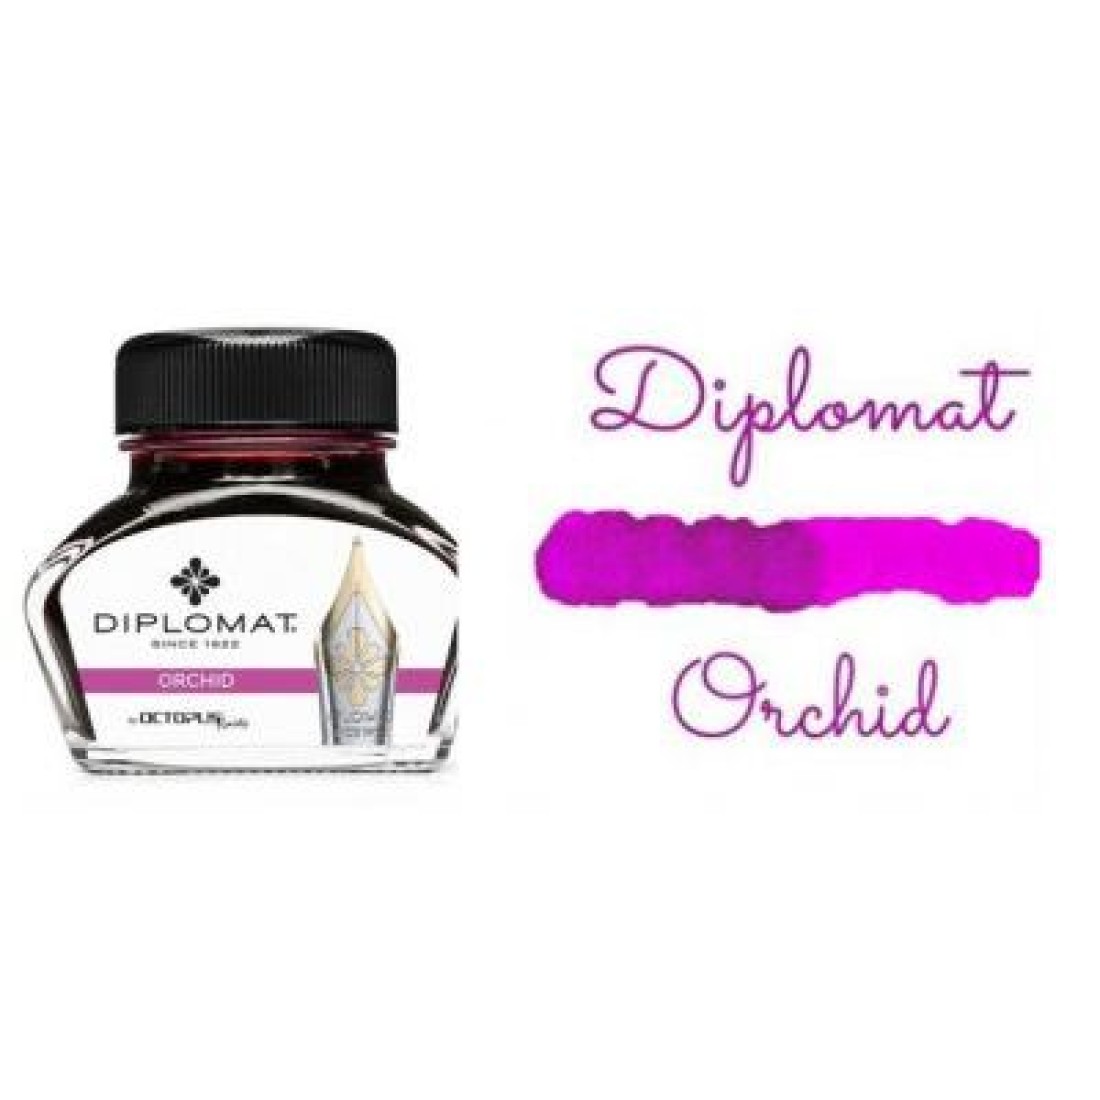 Diplomat Orchid Ink - Ink Bottle